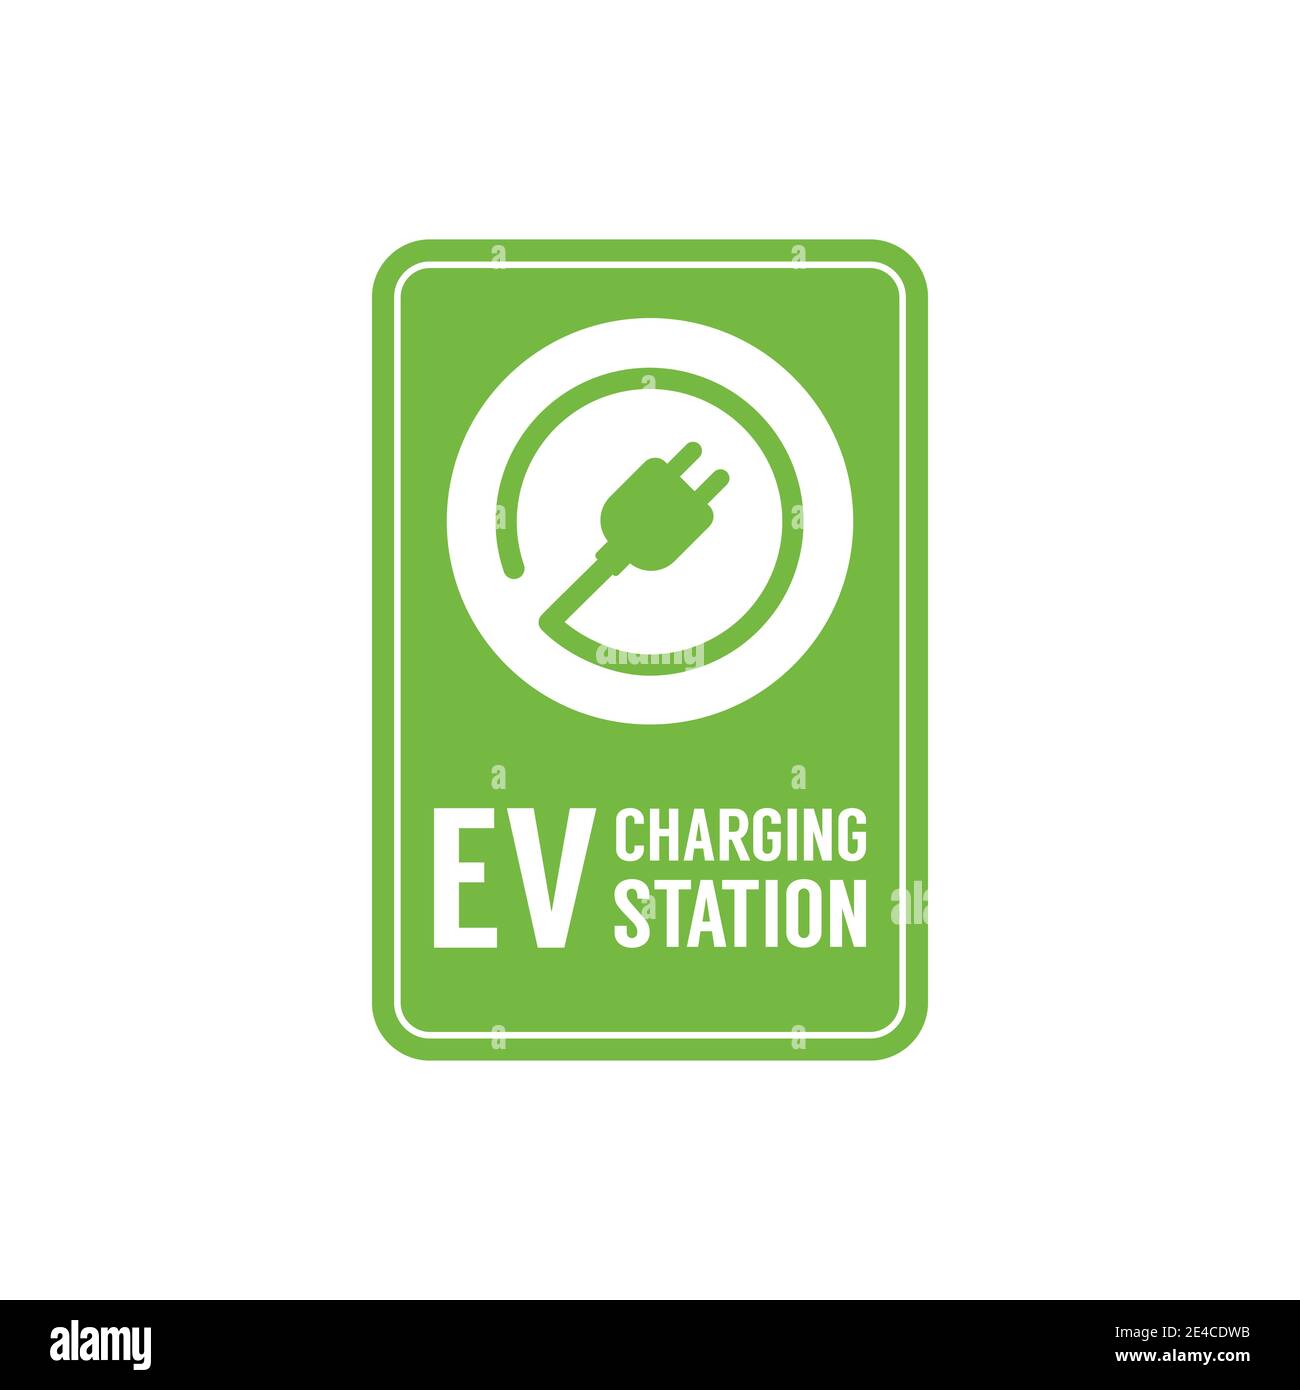 EV charging station banner. Electric vehicle charging station, electric recharging point. Stock Vector